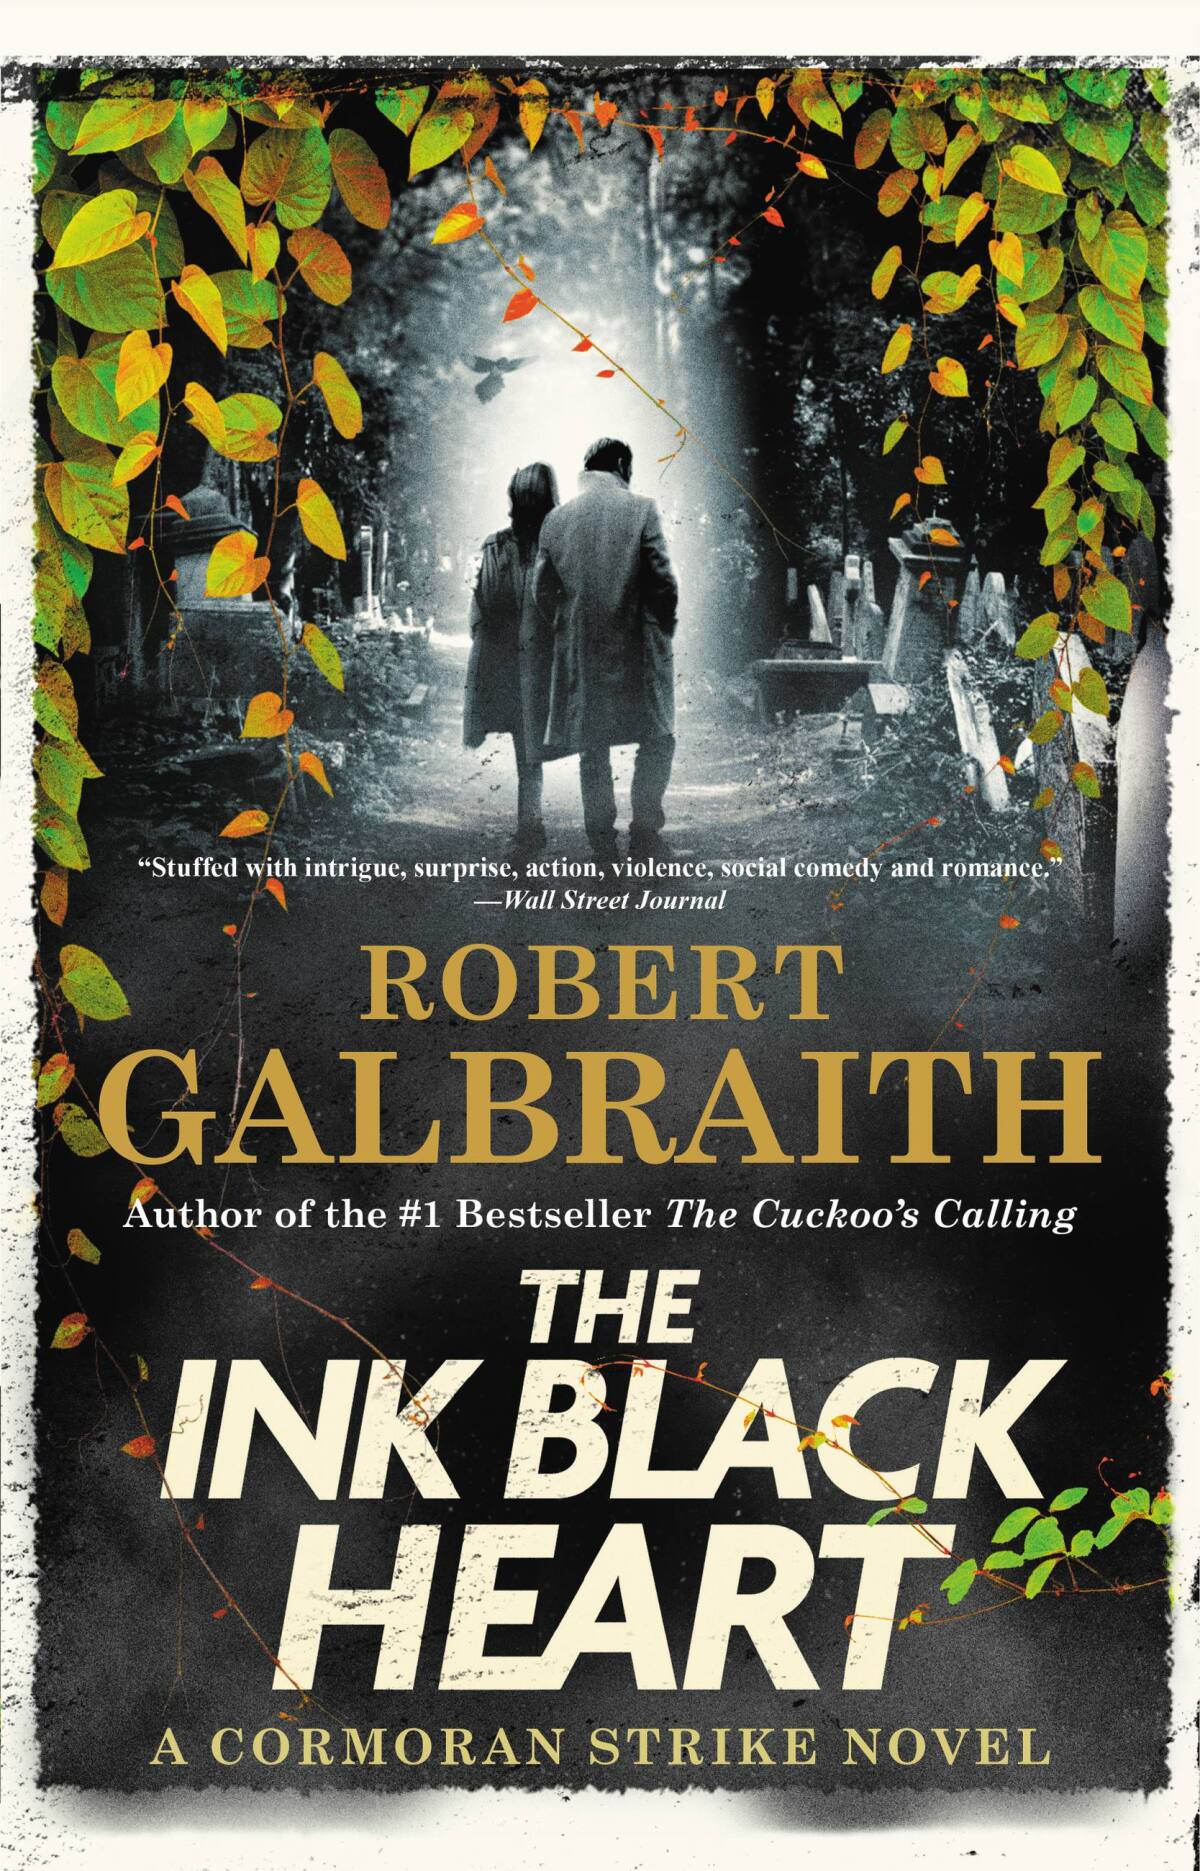 "The Ink Black Heart: A Cormoran Strike Novel," by Robert Galbraith